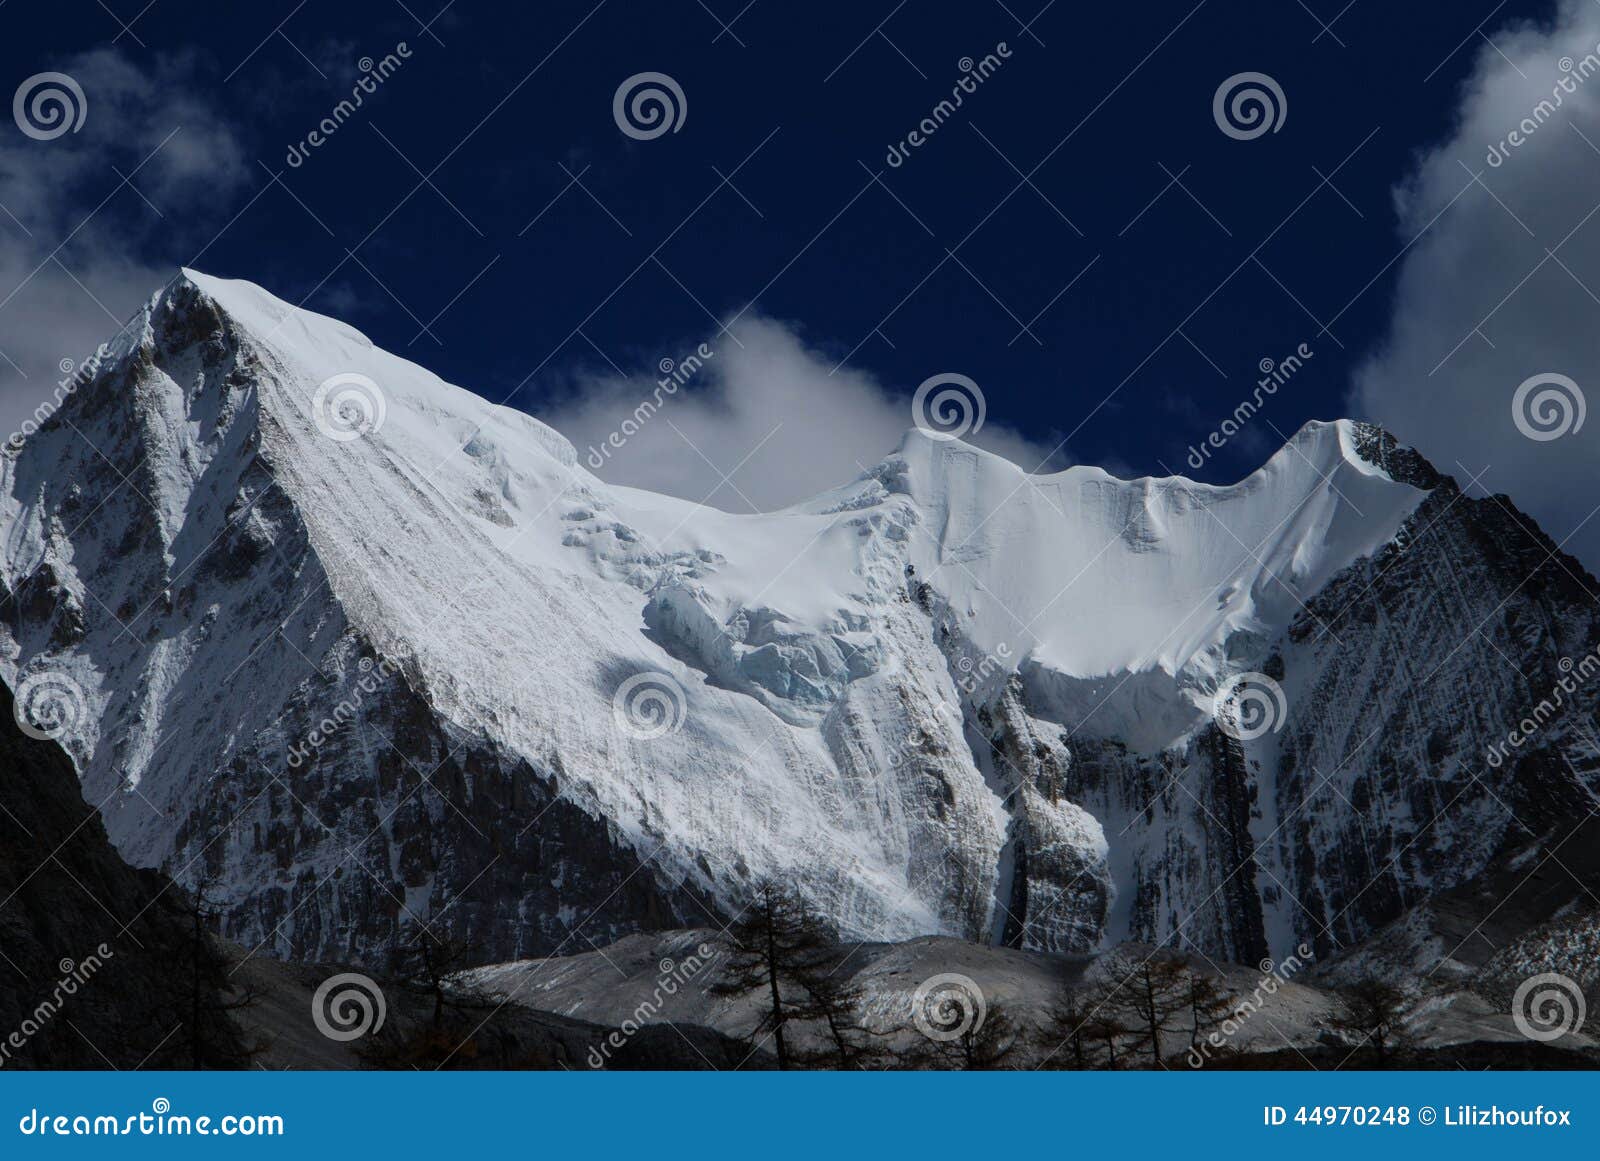 the snow mountain of konka risumgongba